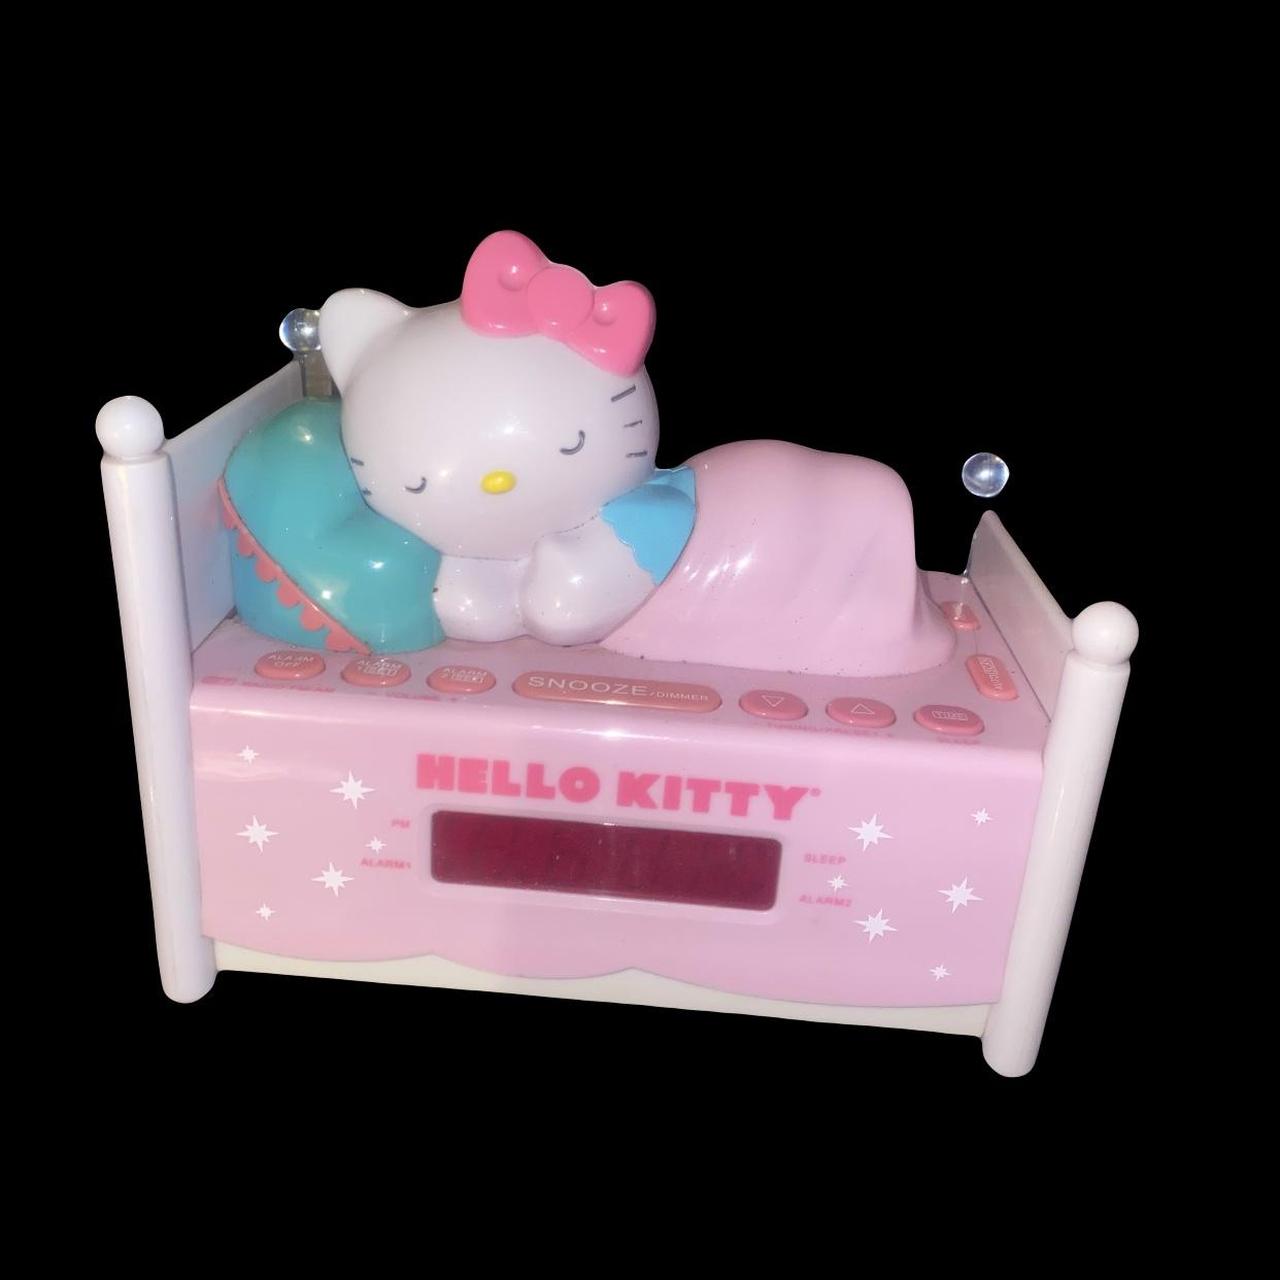 ✩ Hello Kitty Wall Clock ✩ brand new with very light - Depop